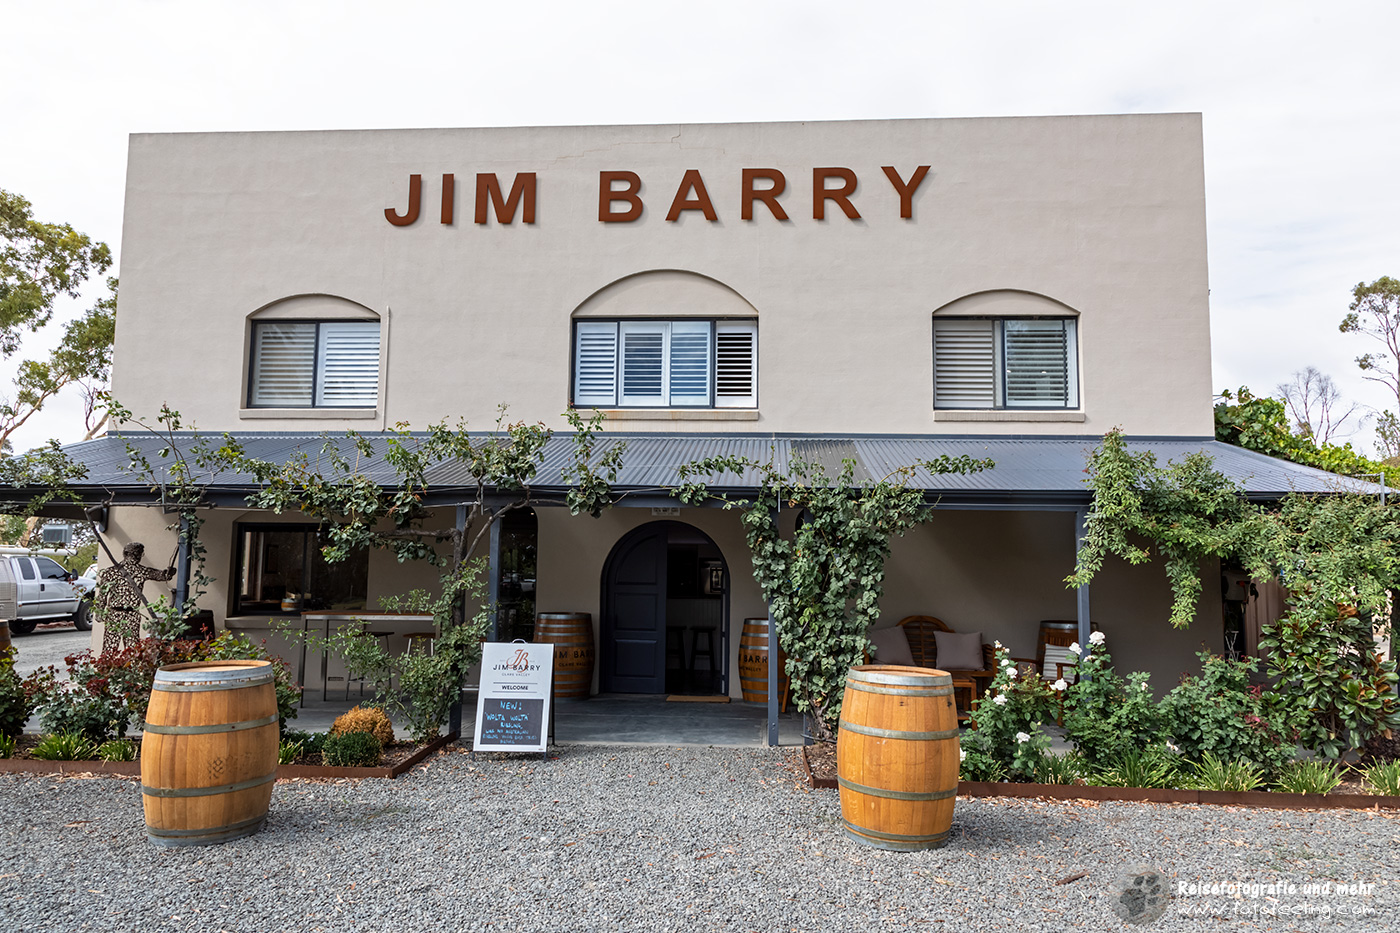 Jim Barry, Clare Valley, South Australia, Australien